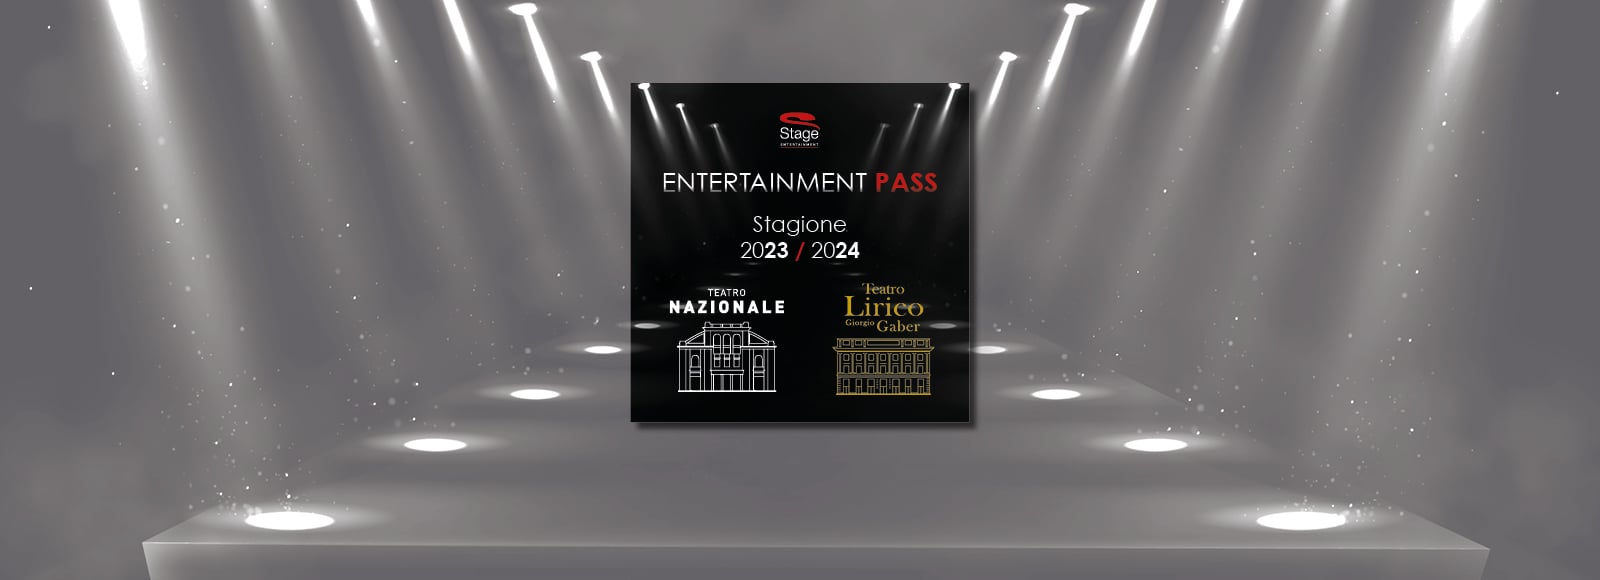 Entertainment Pass 1600x580